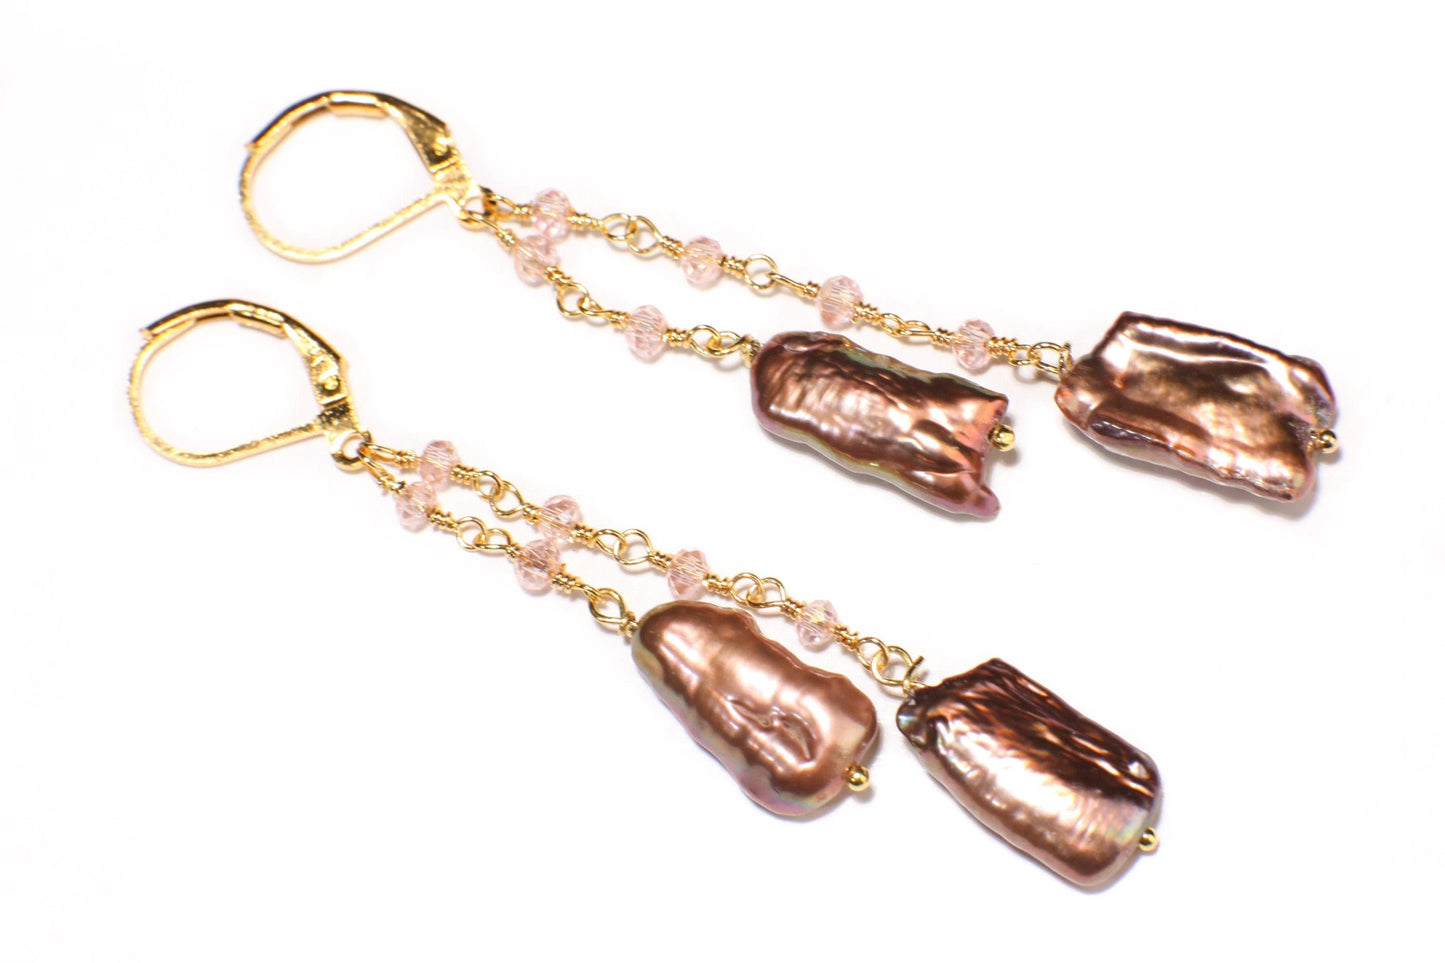 Freshwater Copper Keshi Stick Pearl Wire Wrapped Crystal Rondelle Dangling Gold Leverback Earrings, natural Boho, Beachwear, Handmade Gift